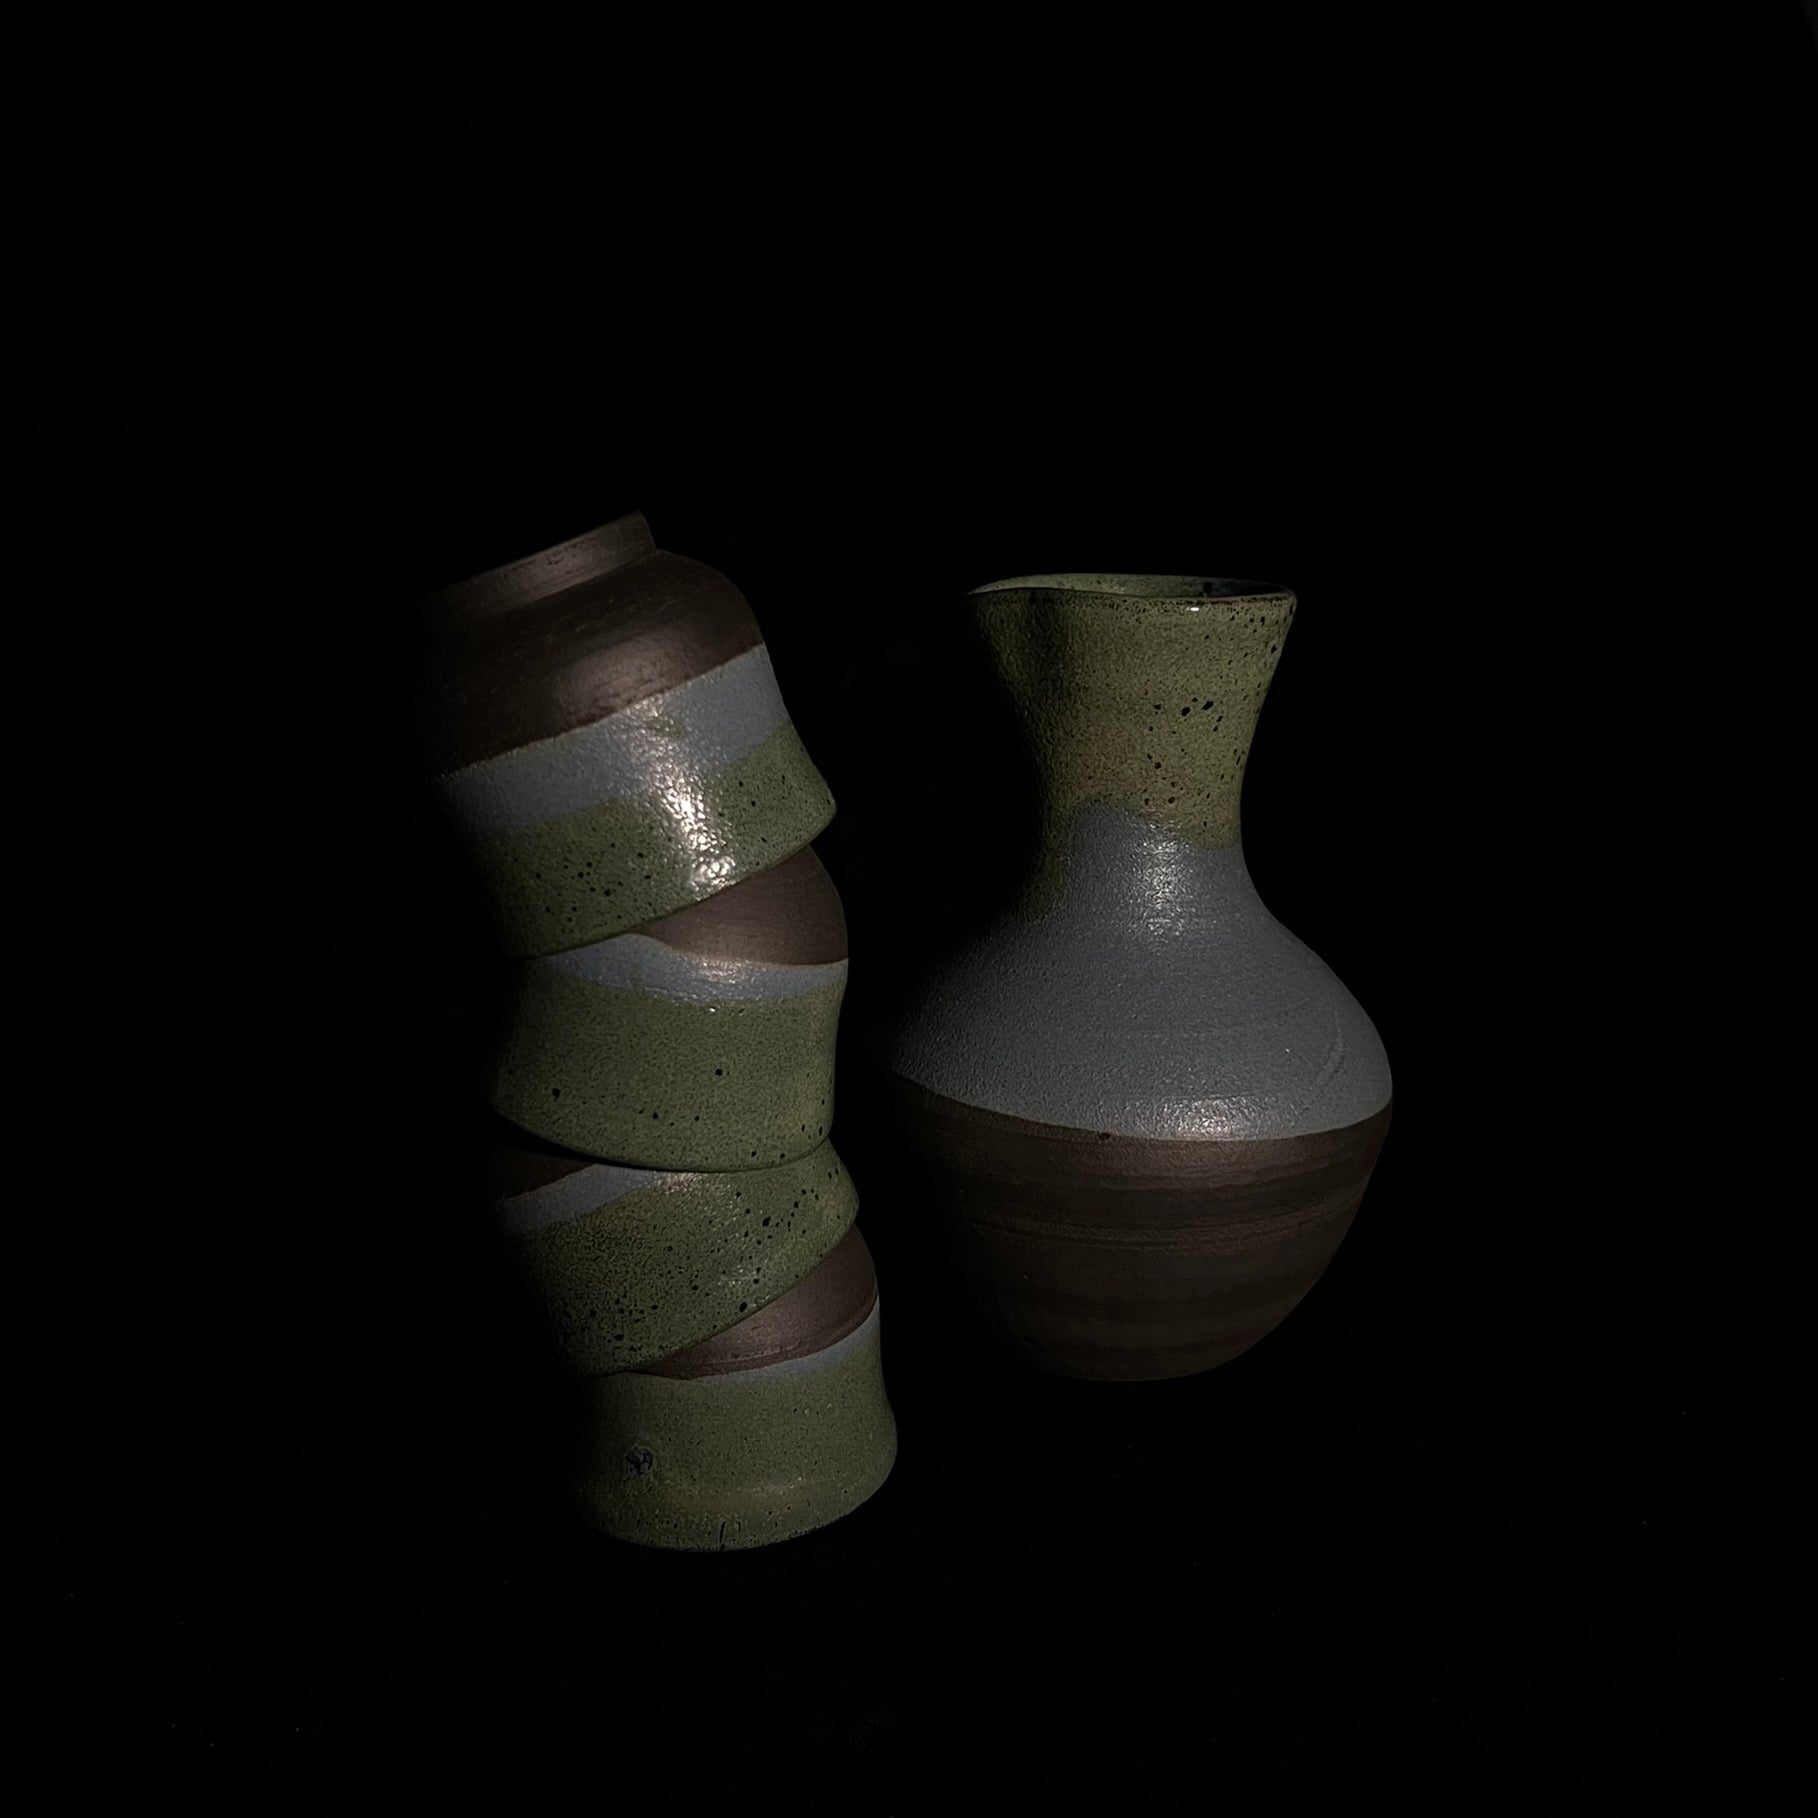 Handmade Japanese Sake Set | Pottery Sake Set | Unique Sake Set | Ceramic Tea Set | Tea Ceremony Set | Sake Ceremony Set | One of a kind